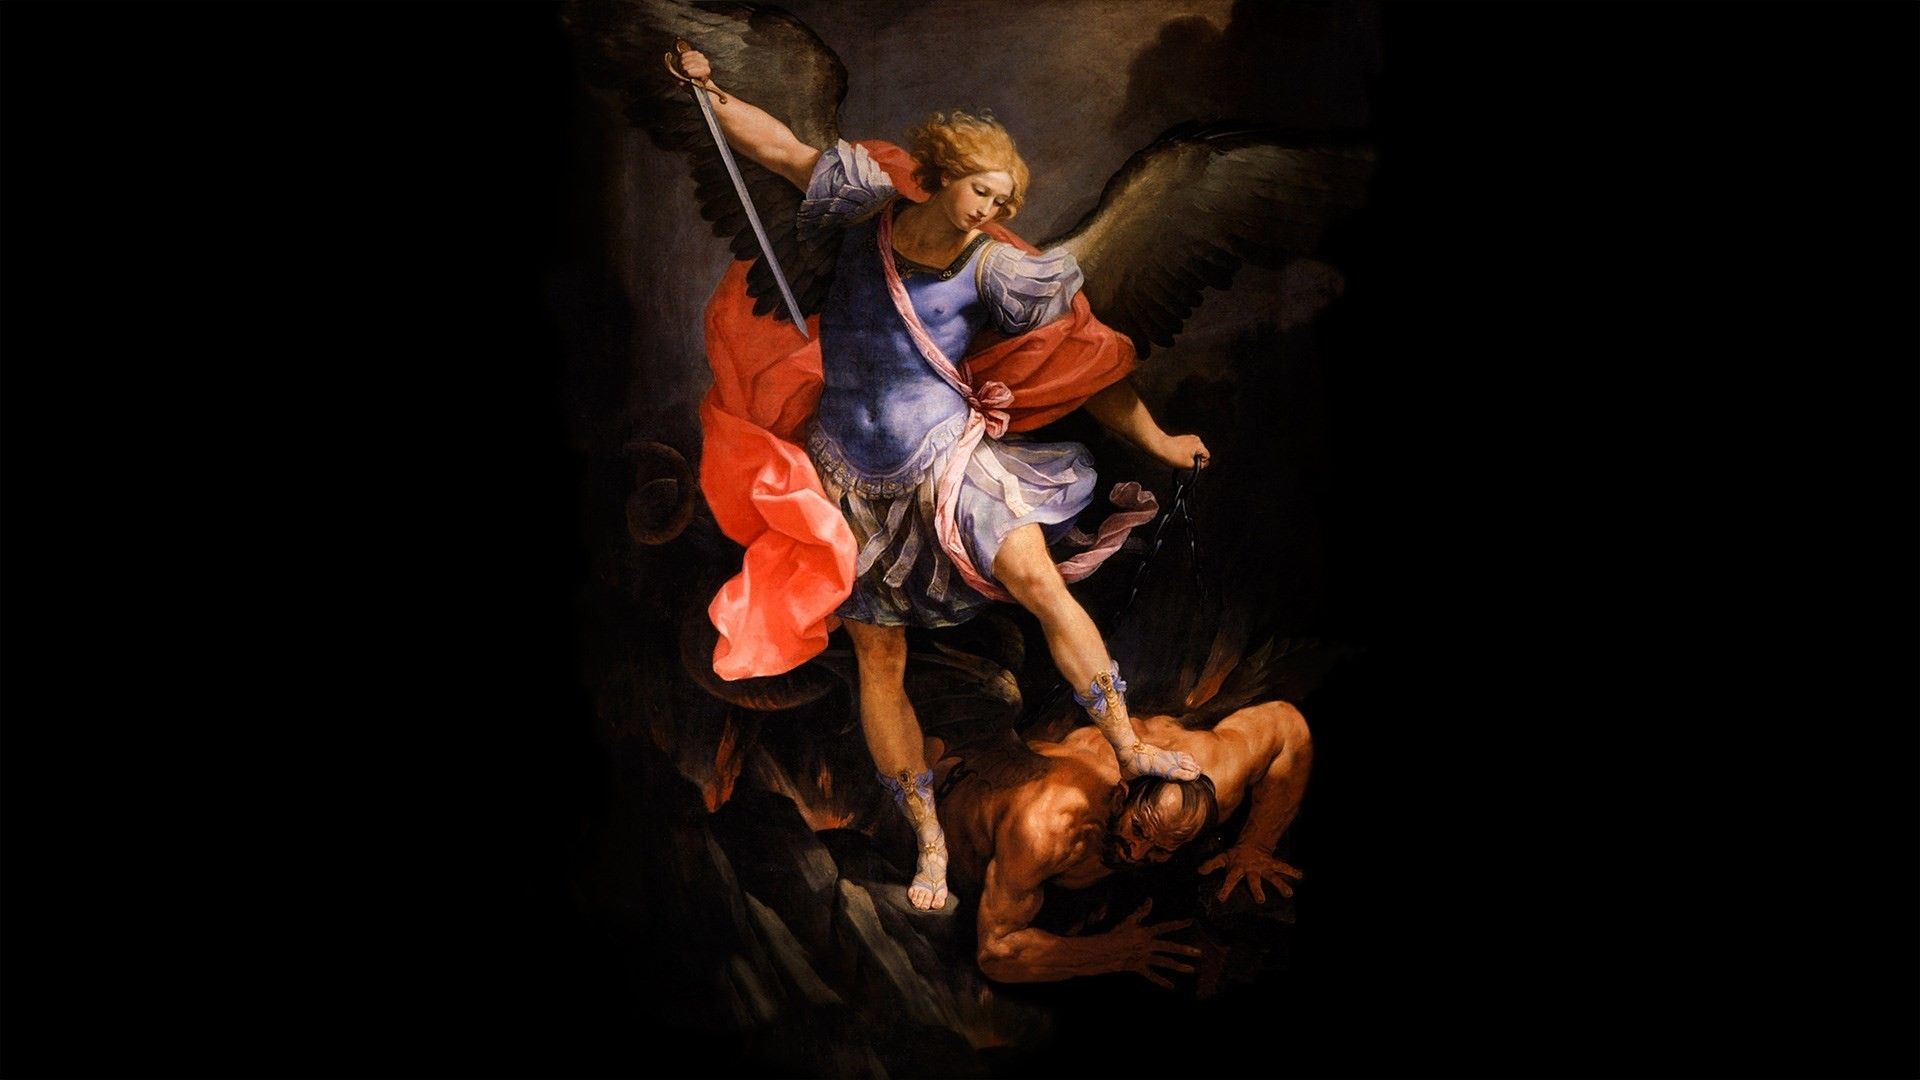 Saint Michael The Archangel Wallpaper On